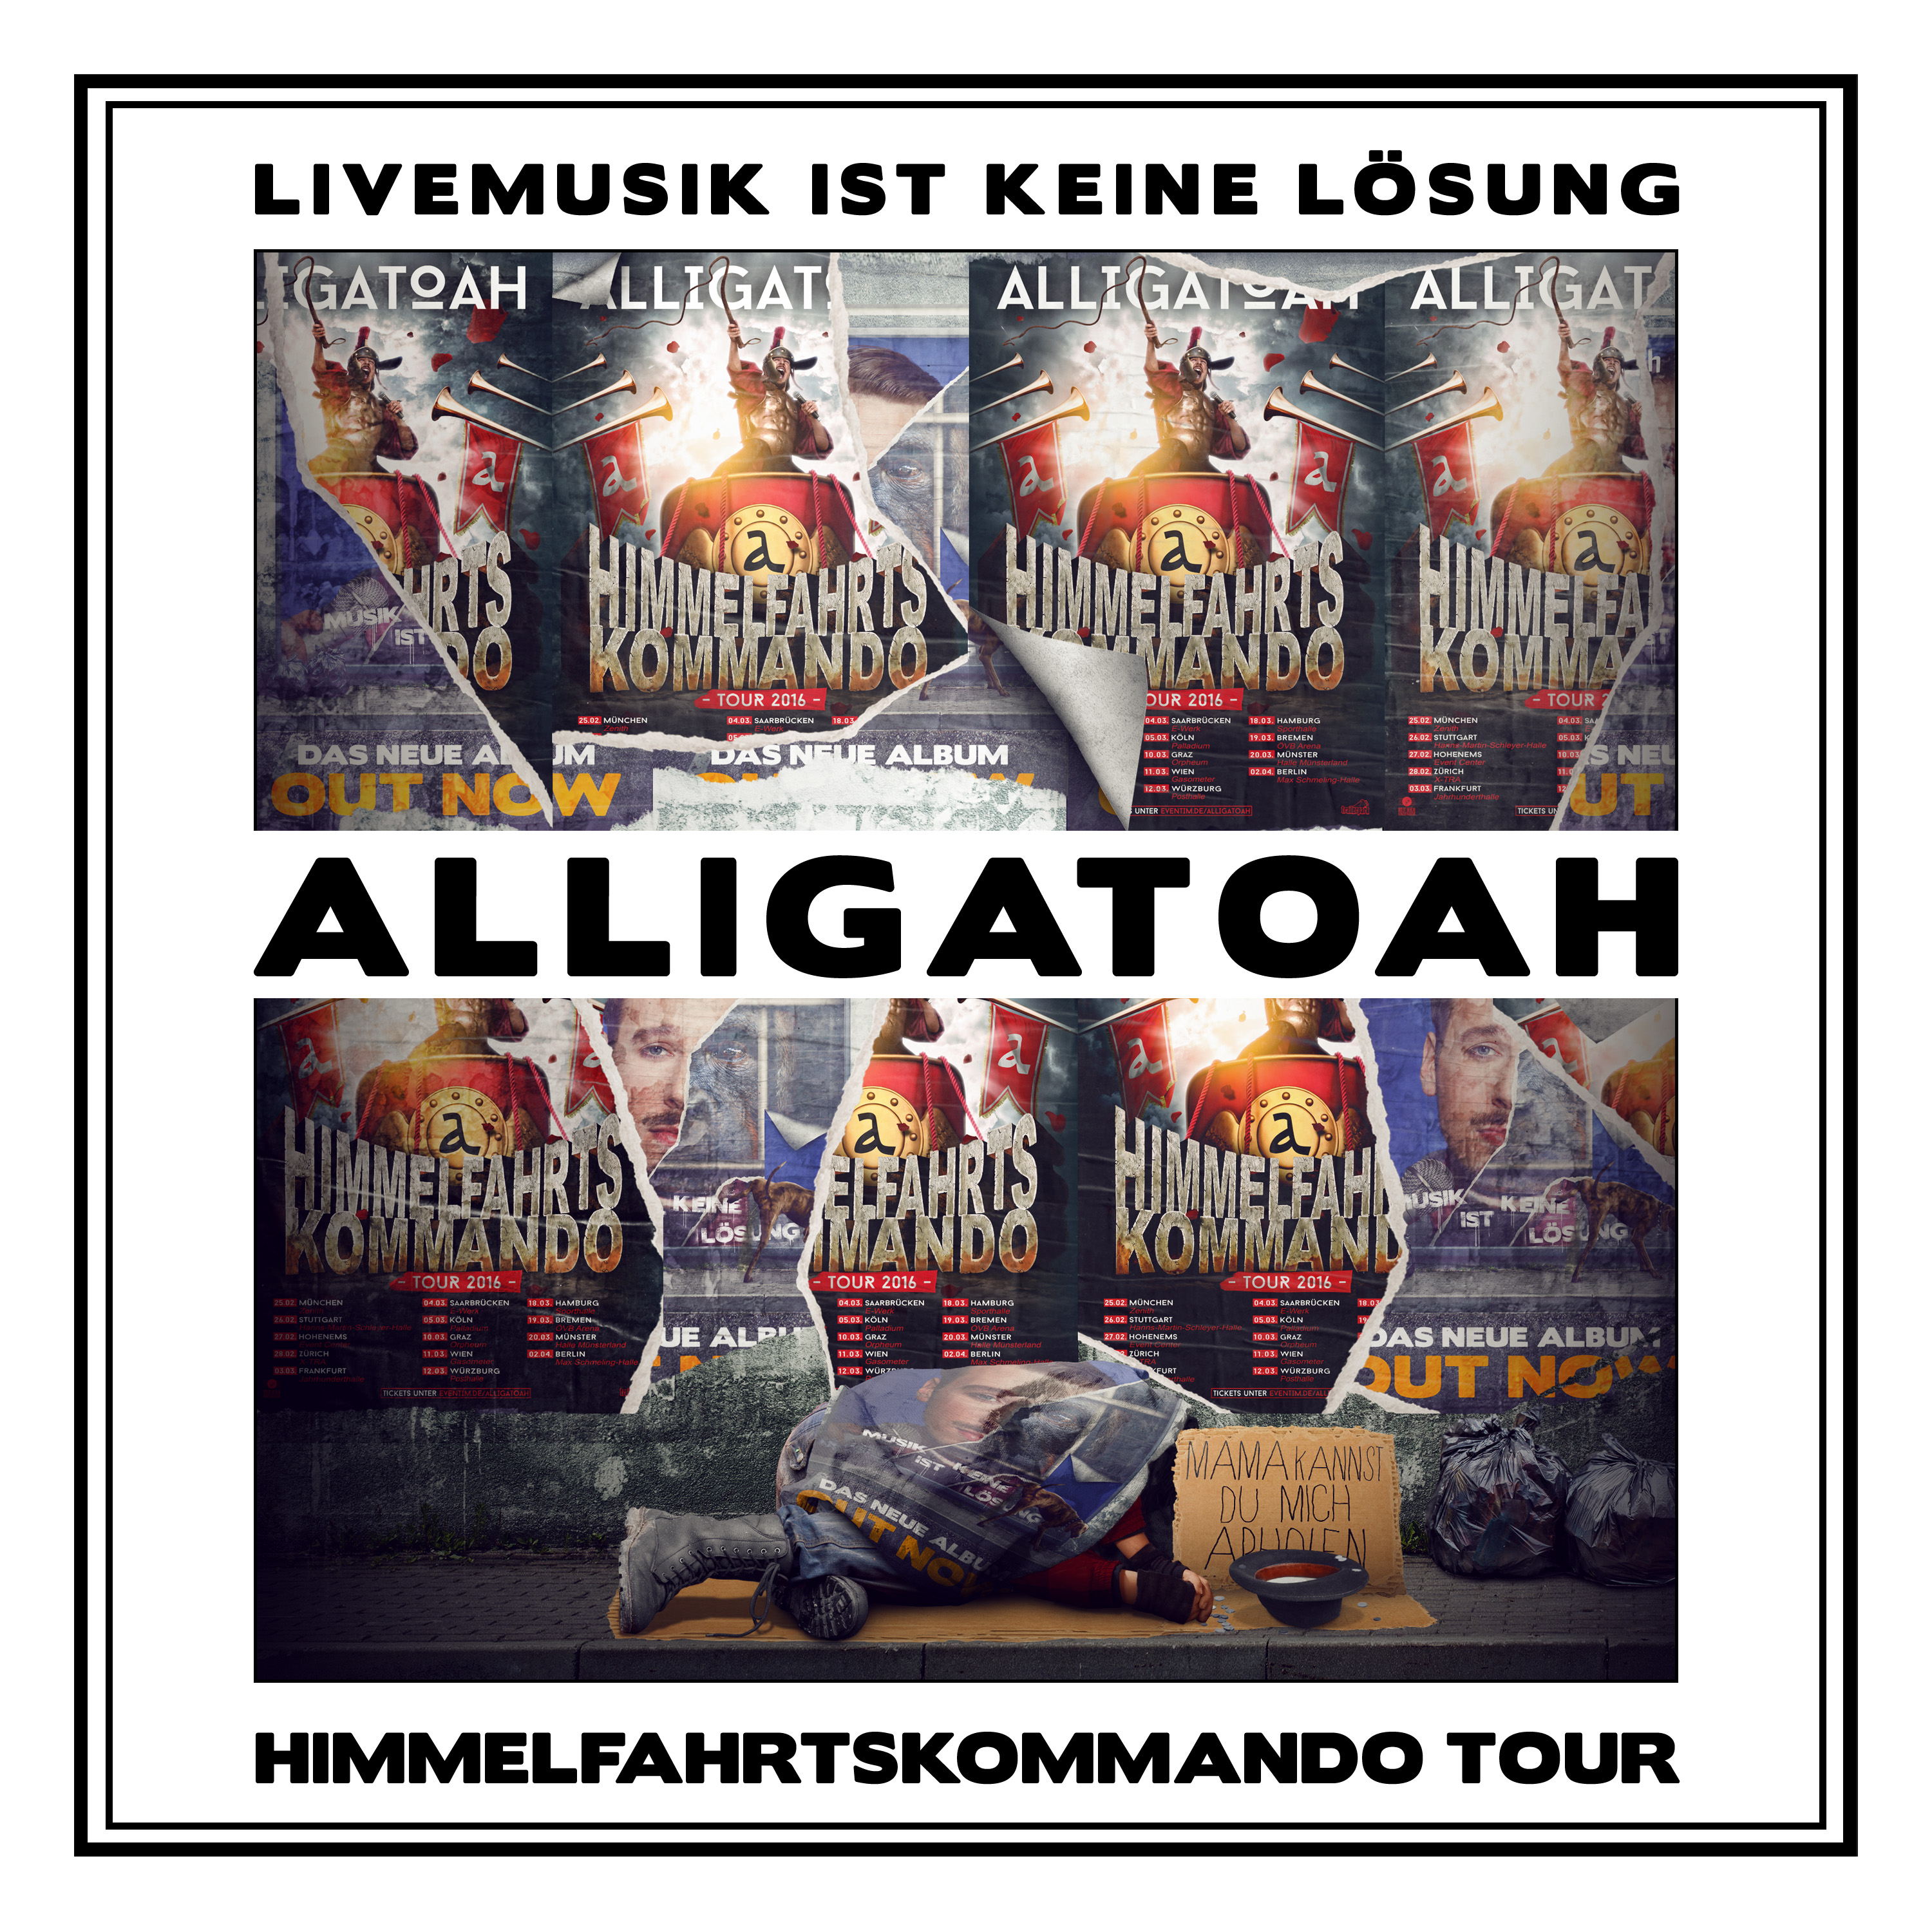 Alligatoah - Lösung Alligatoah Livemusik Tour Himmelfahrtskommando DVD + - Keine Video) Fanbox) - - (Ltd. (3CD+DVD+T-Shirt) (CD Ist